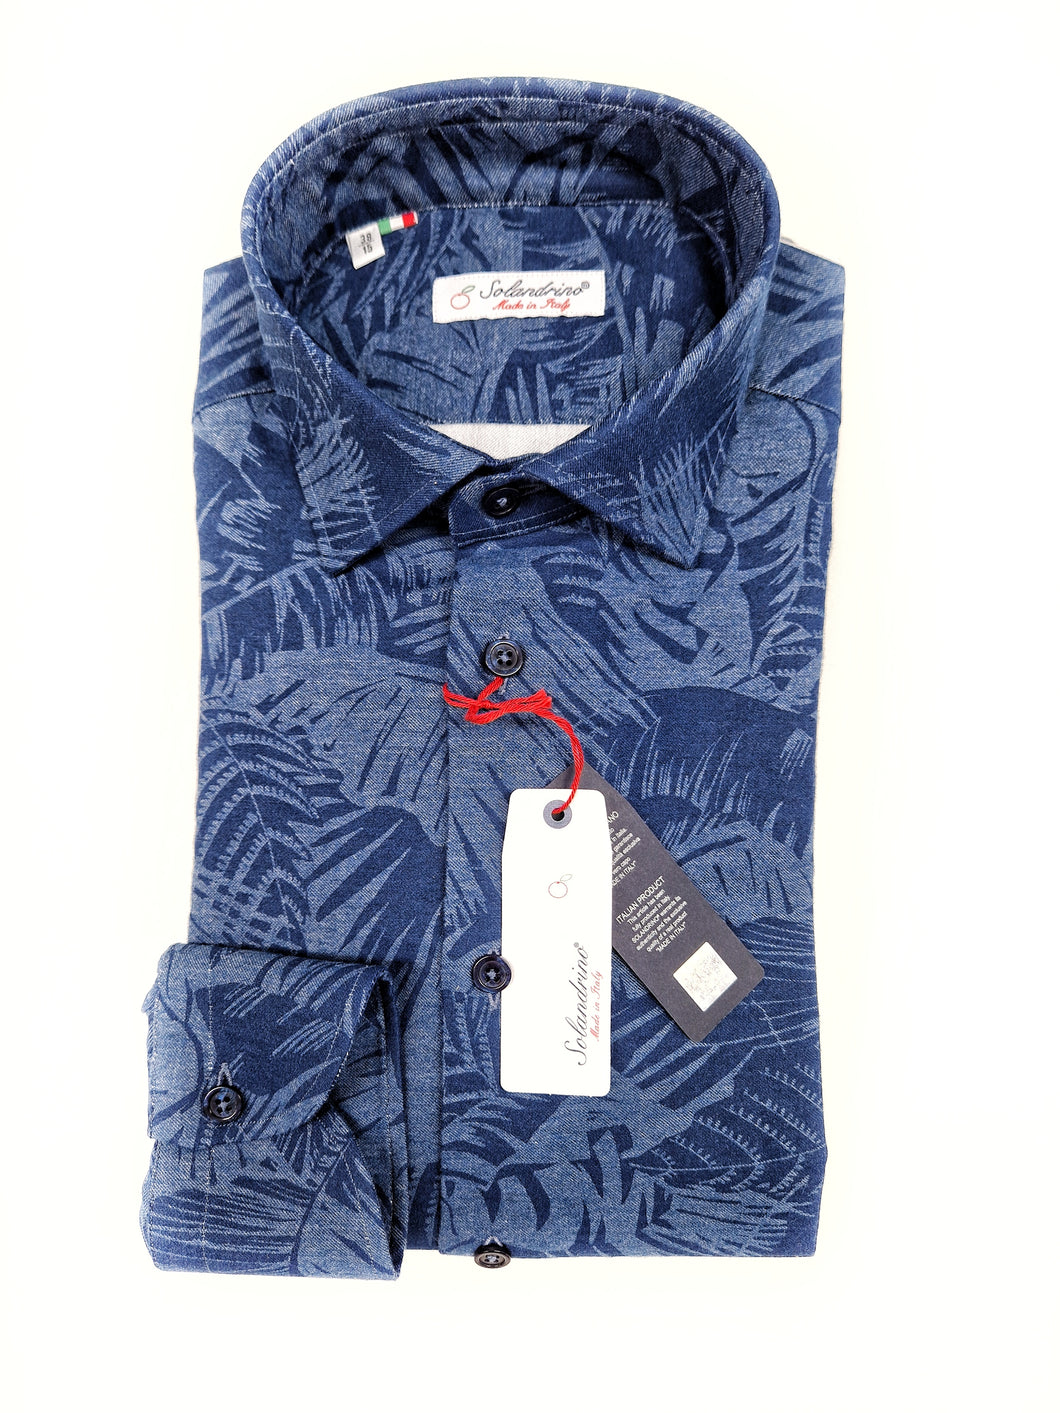 Camicia uomo jeans blu stone wash FANTASIA FASHION  puro cotone made in Italy Blue Navy shirt